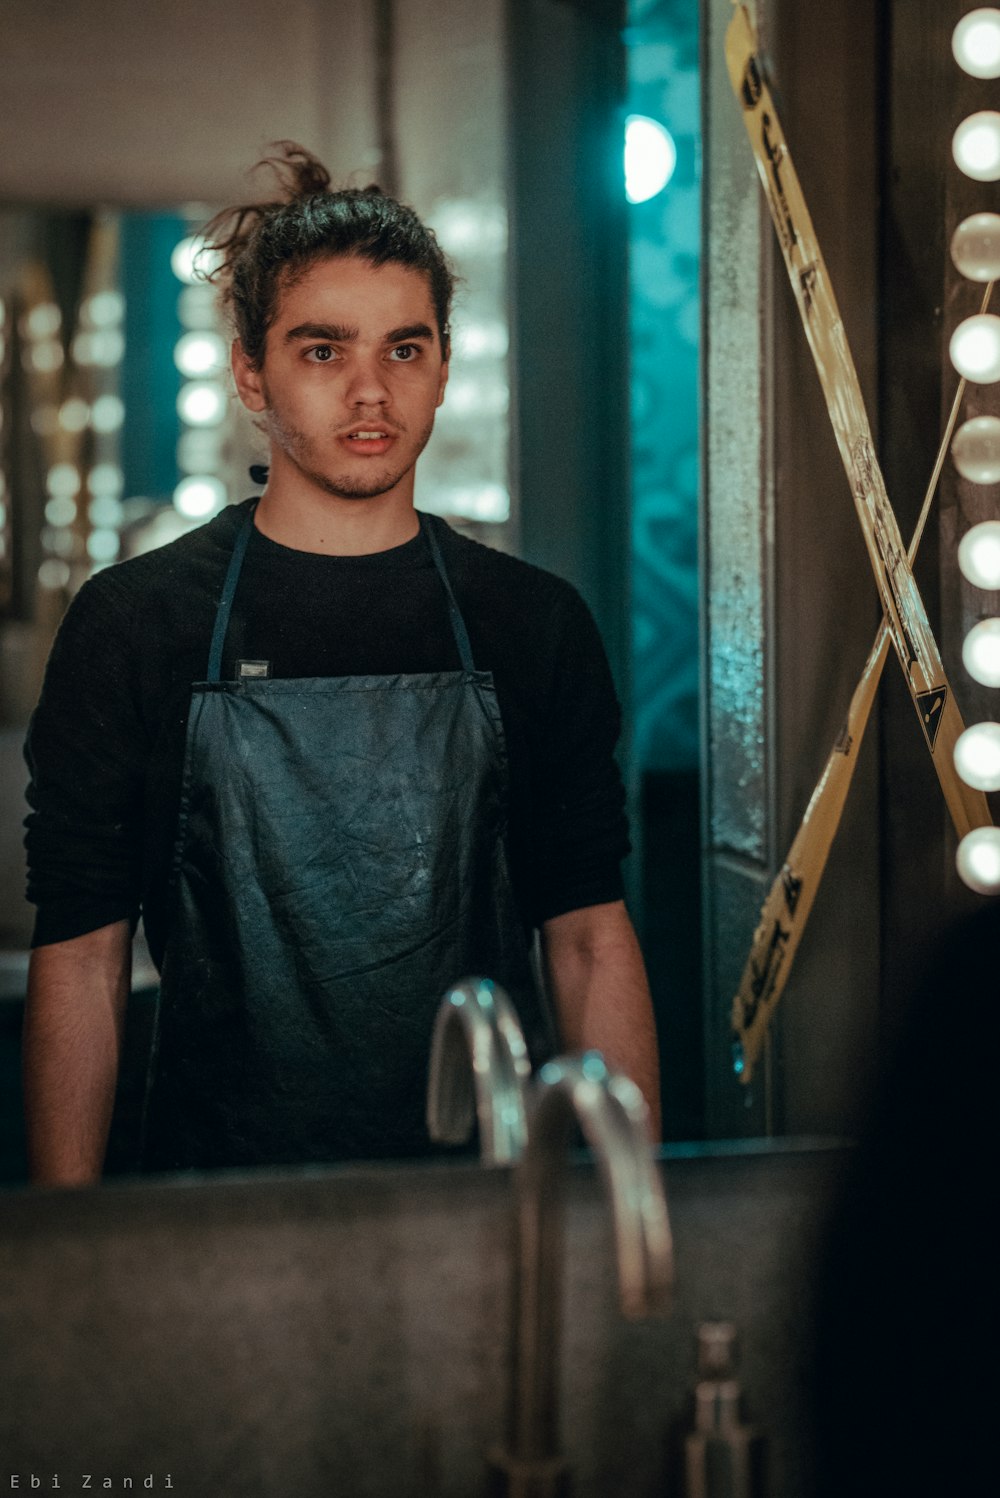 photo of man looking at mirror wearing black apron